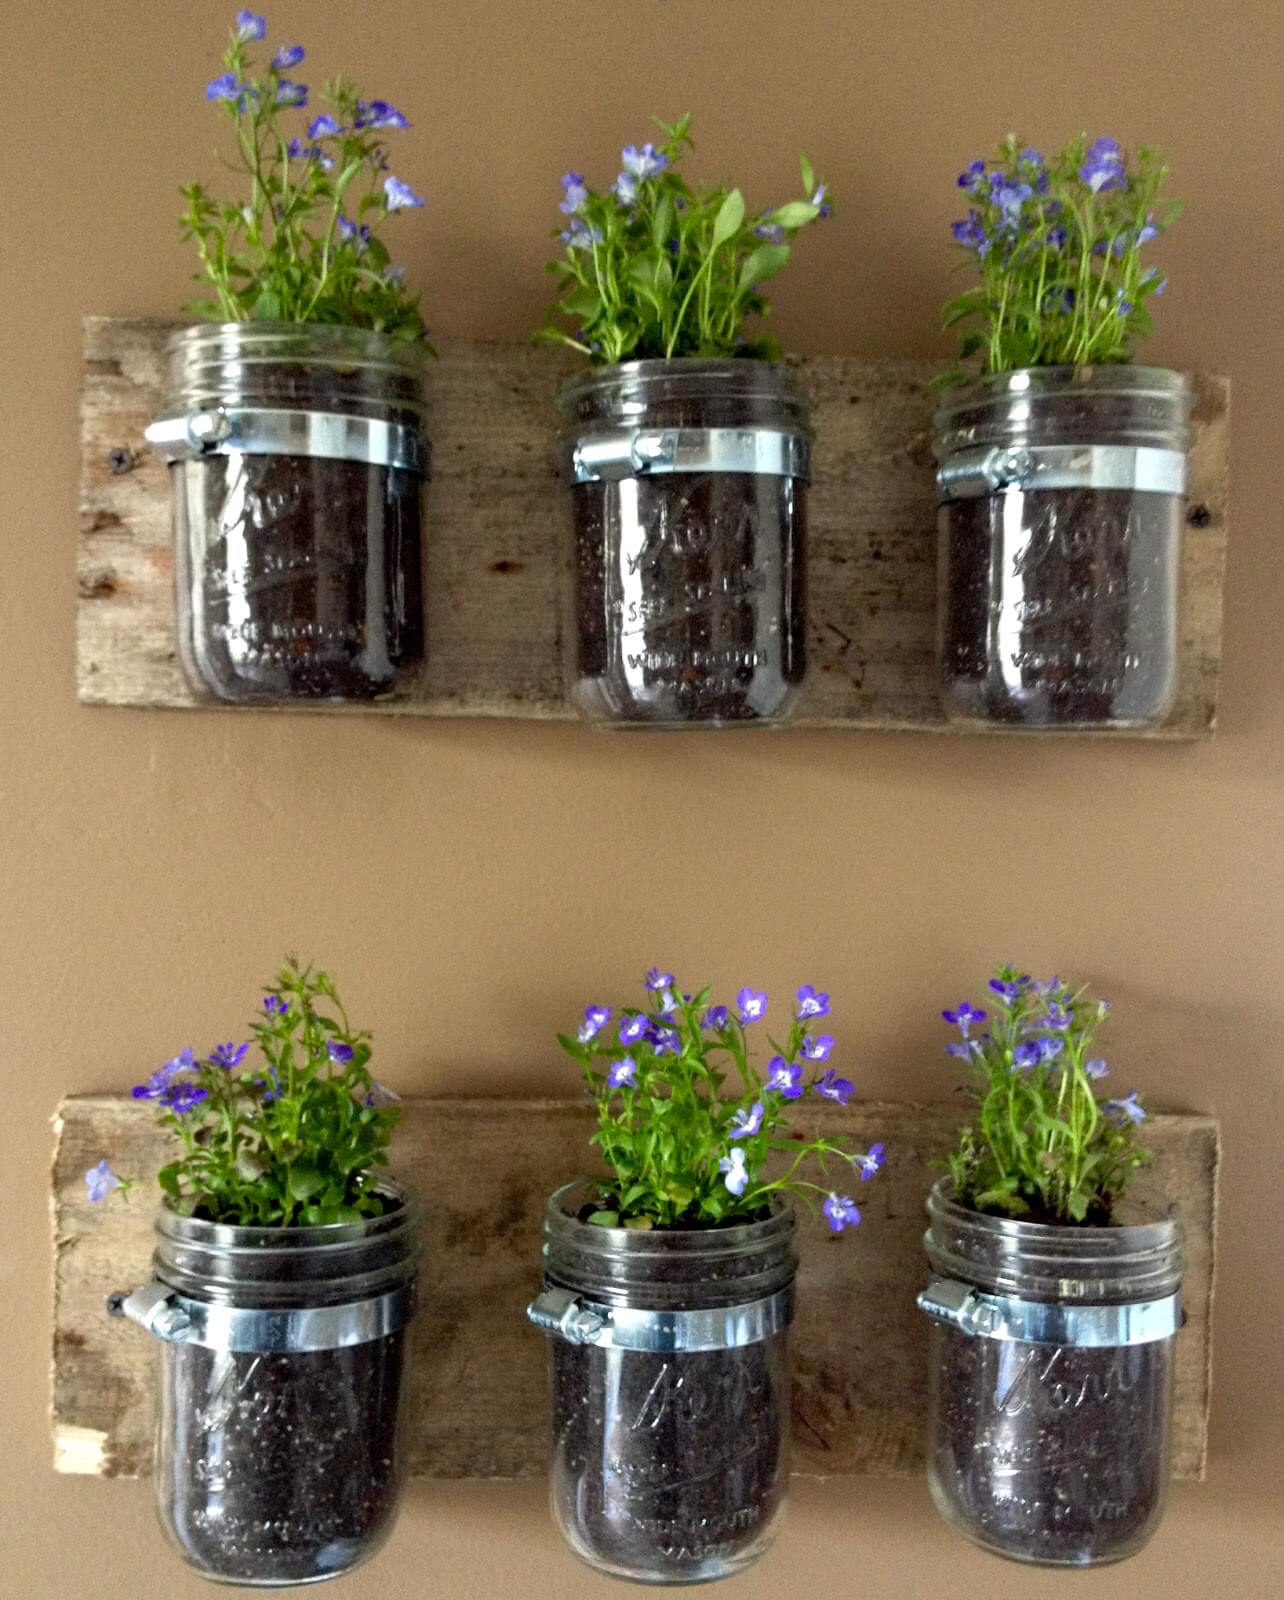 Hanging Mason Jars with Growing Flowers